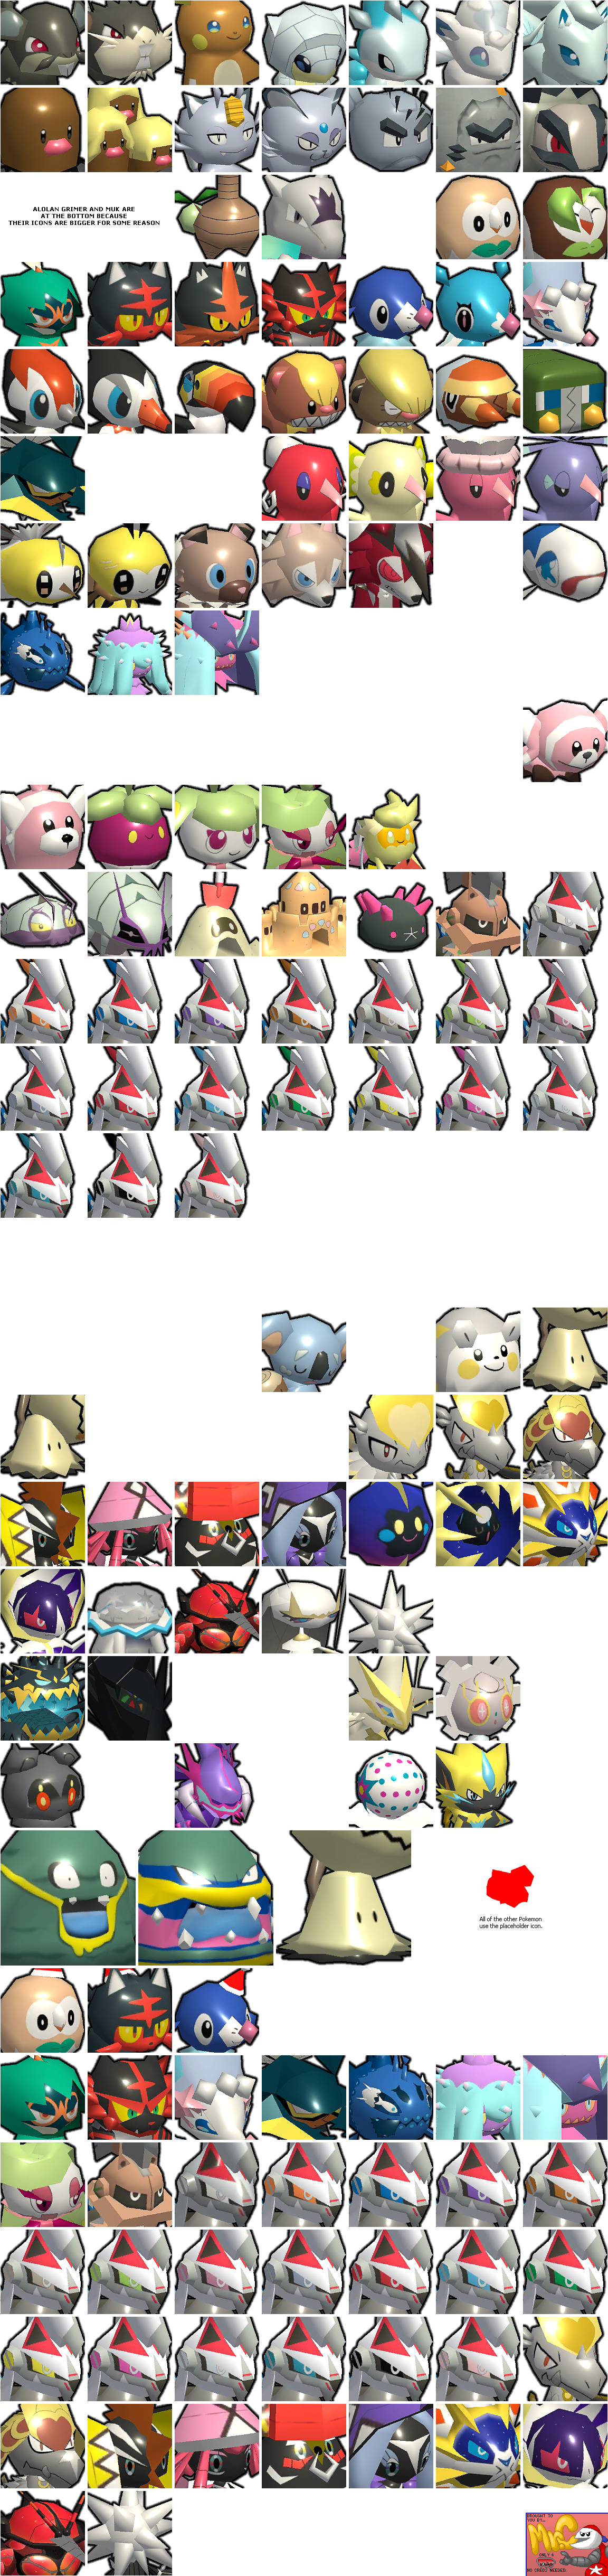 Pokémon Rumble Rush - Pokémon Icons (7th Generation)